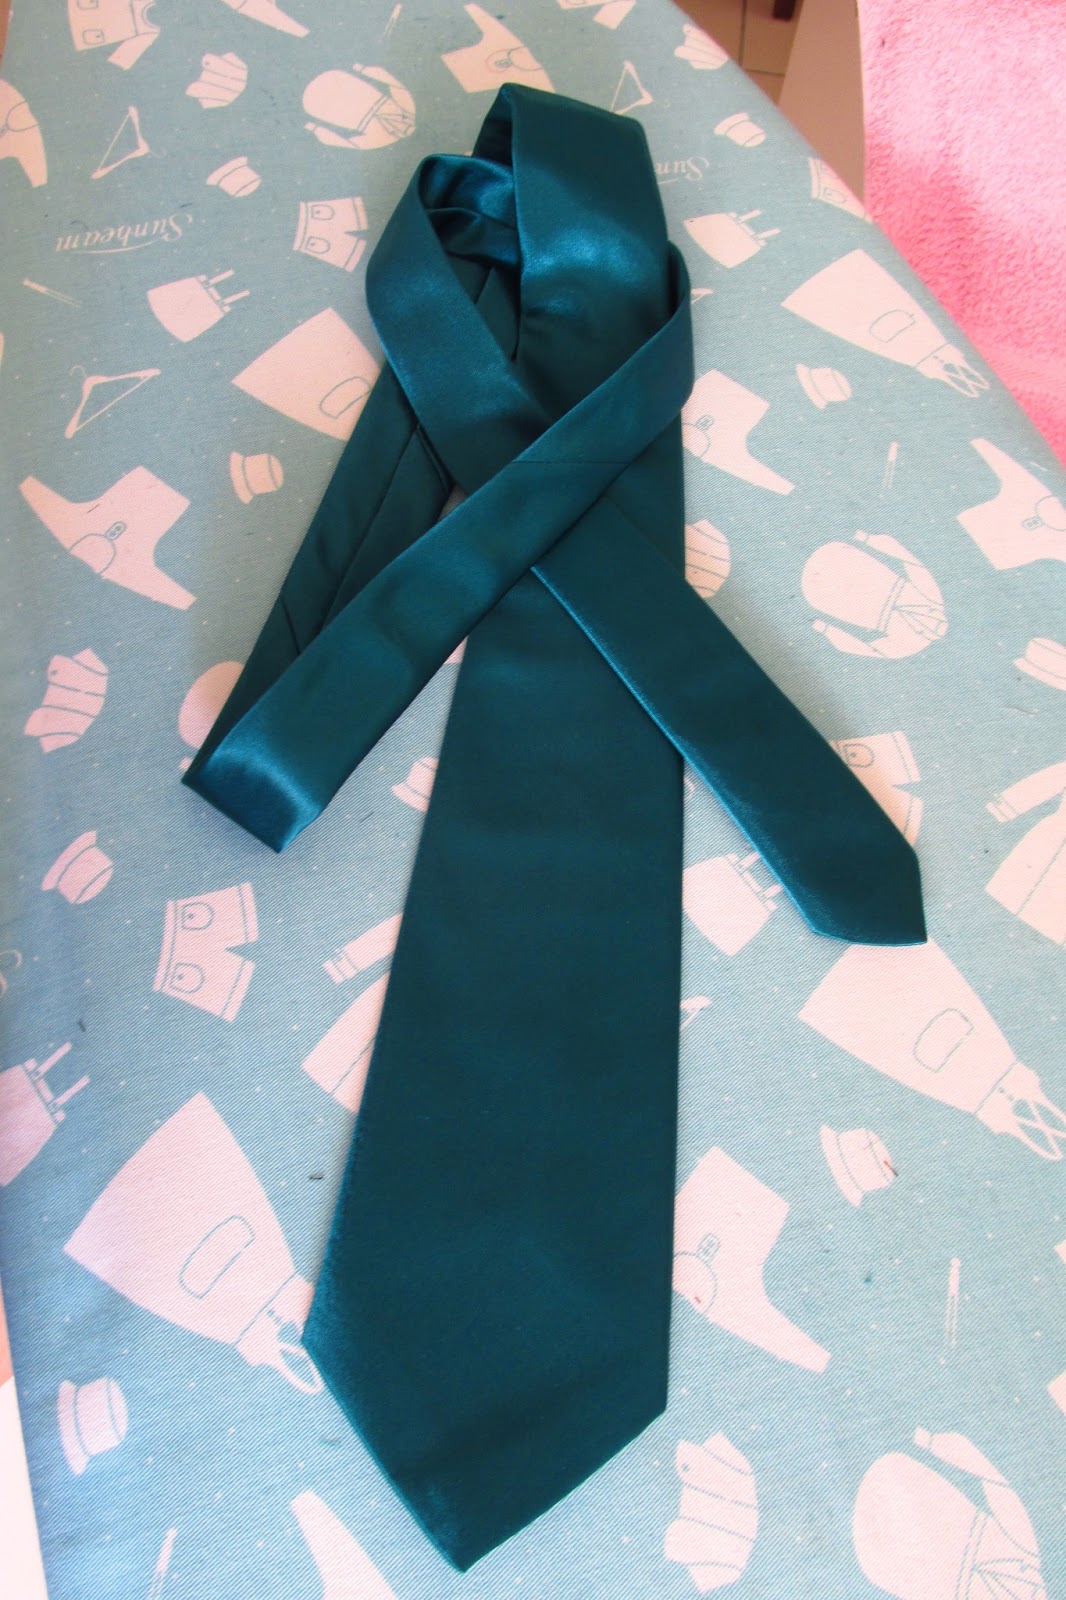 Twenty-first Century Lady: How to Make a Men's Tie... Properly